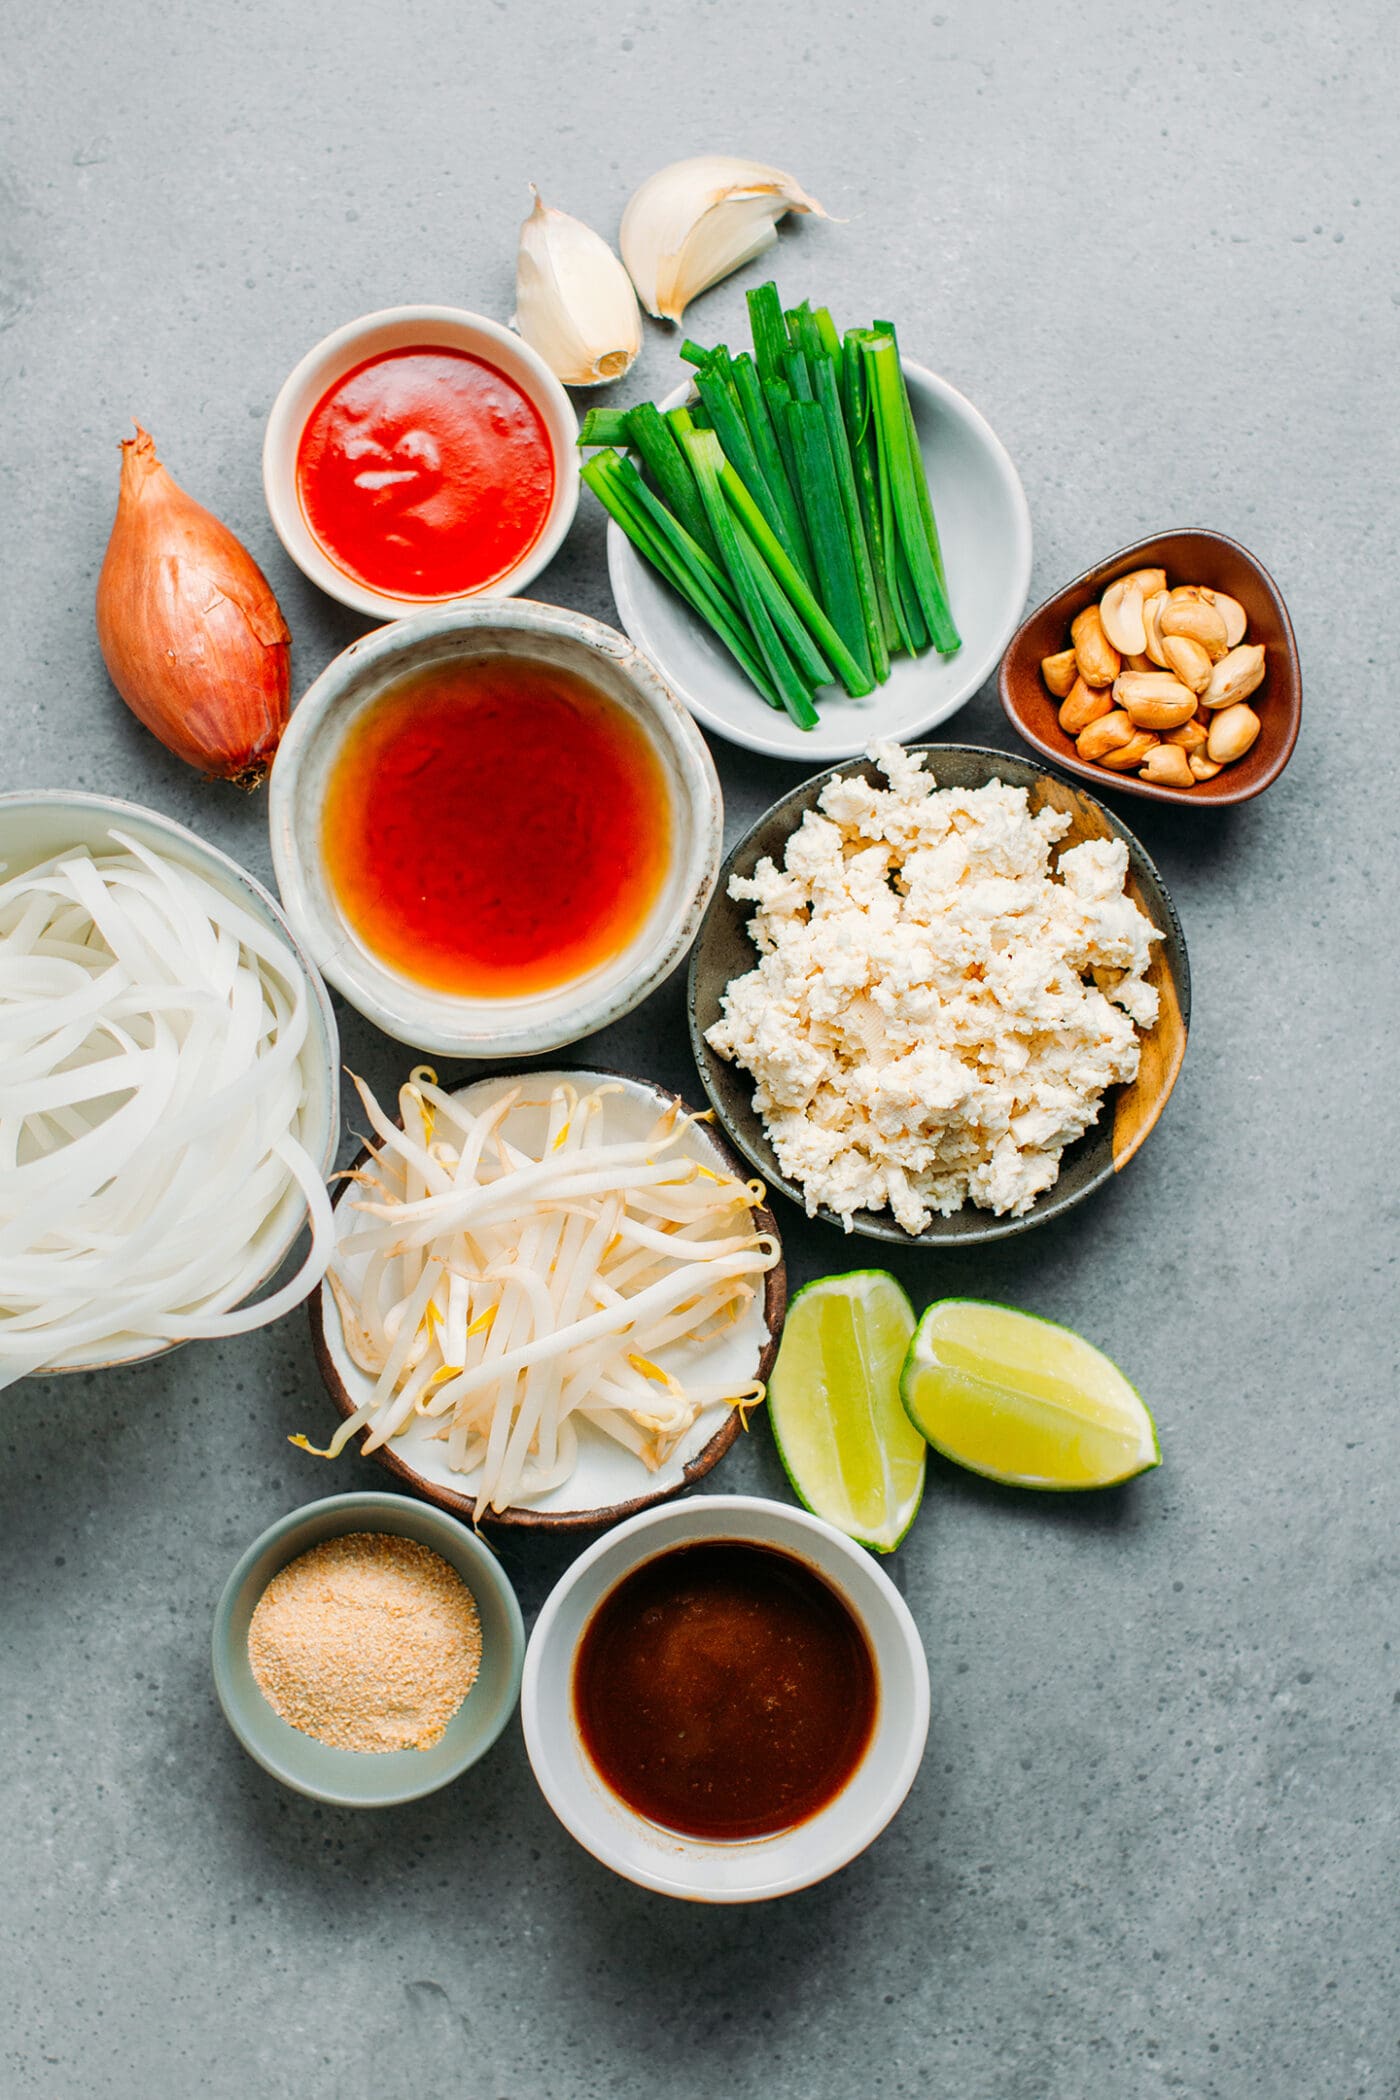 Ingredients like rice noodles, fish sauce, chives, tofu, tamarind juice.